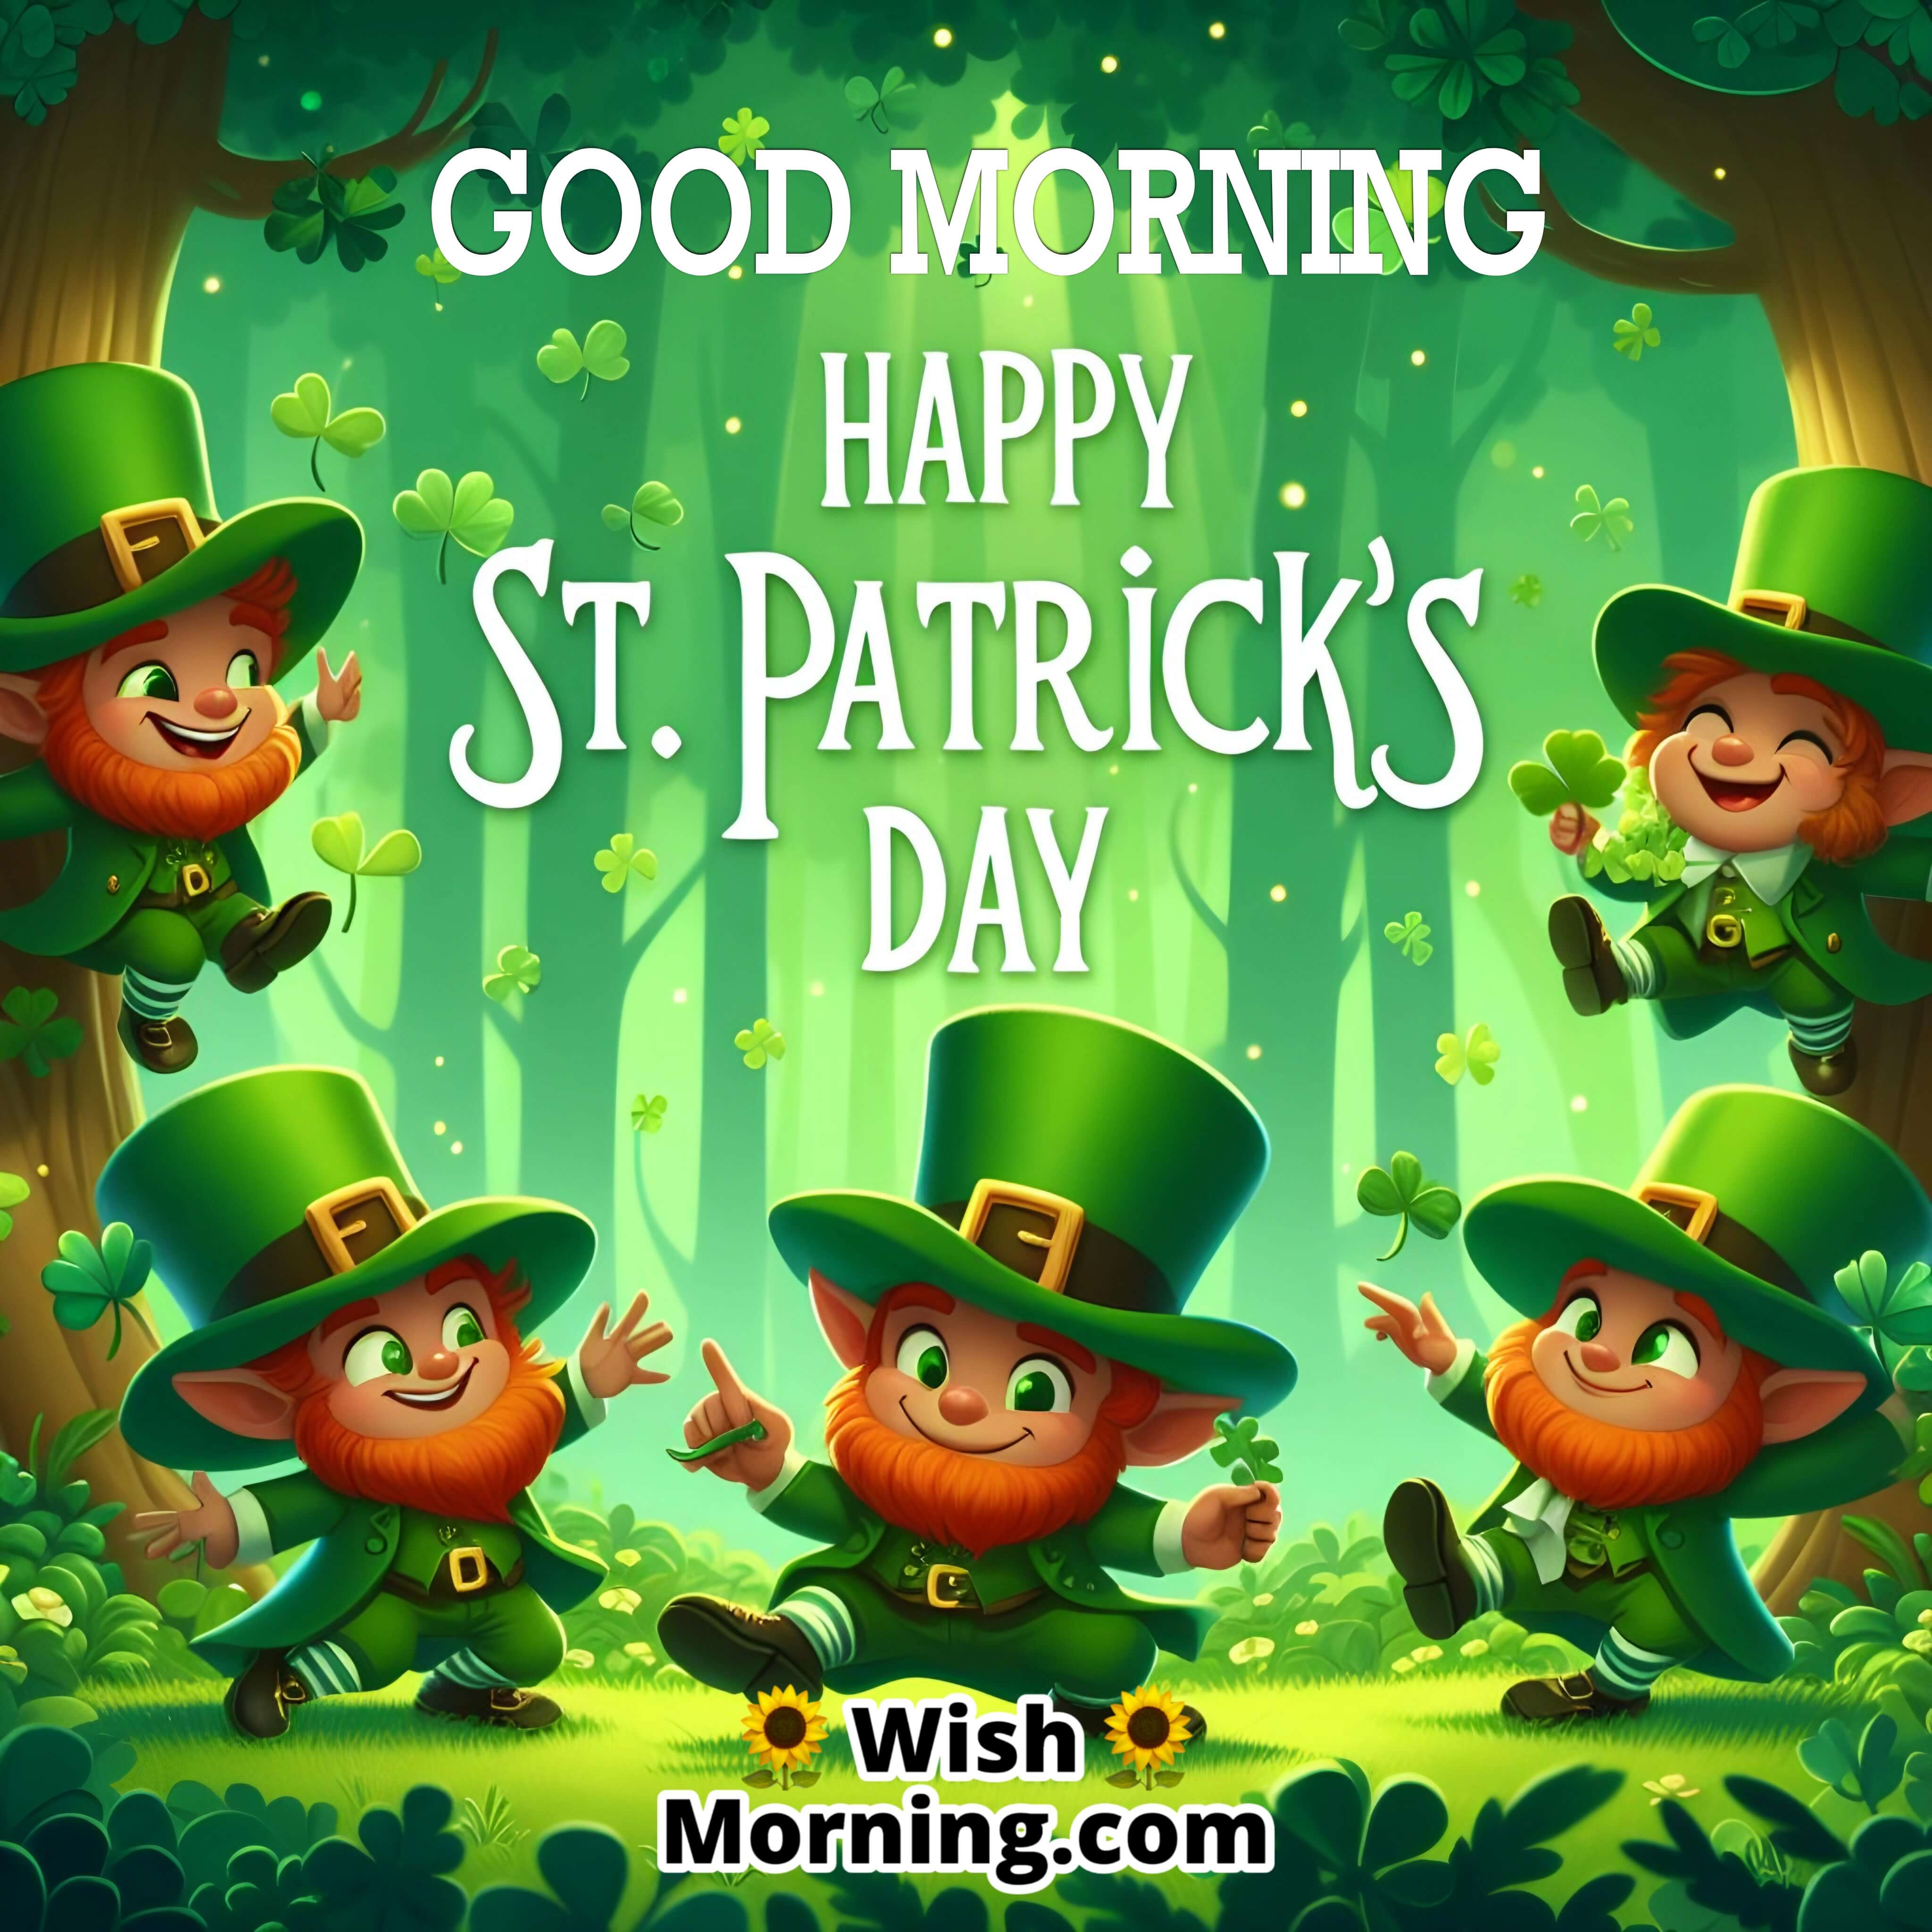 Good Morning St. Patrick's Day Leprechauns